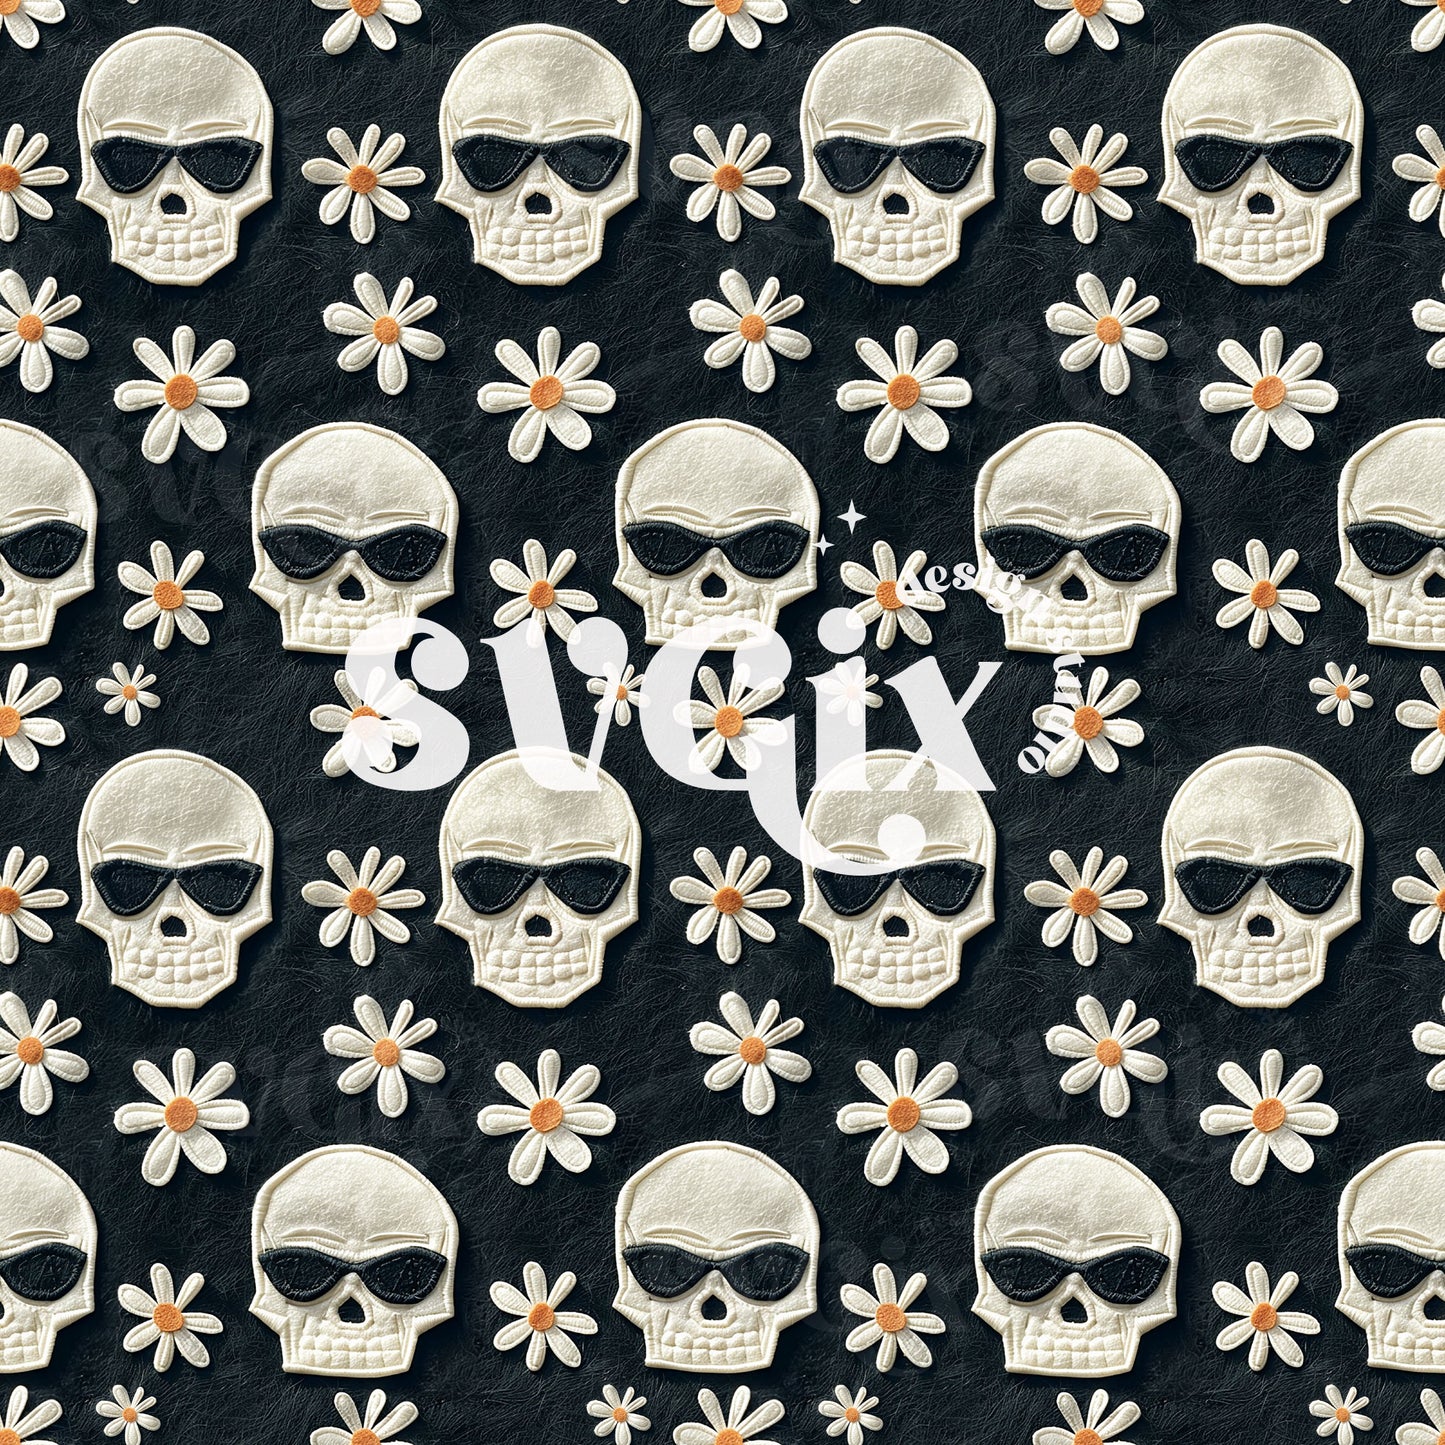 Groovy Skulls Seamless Pattern